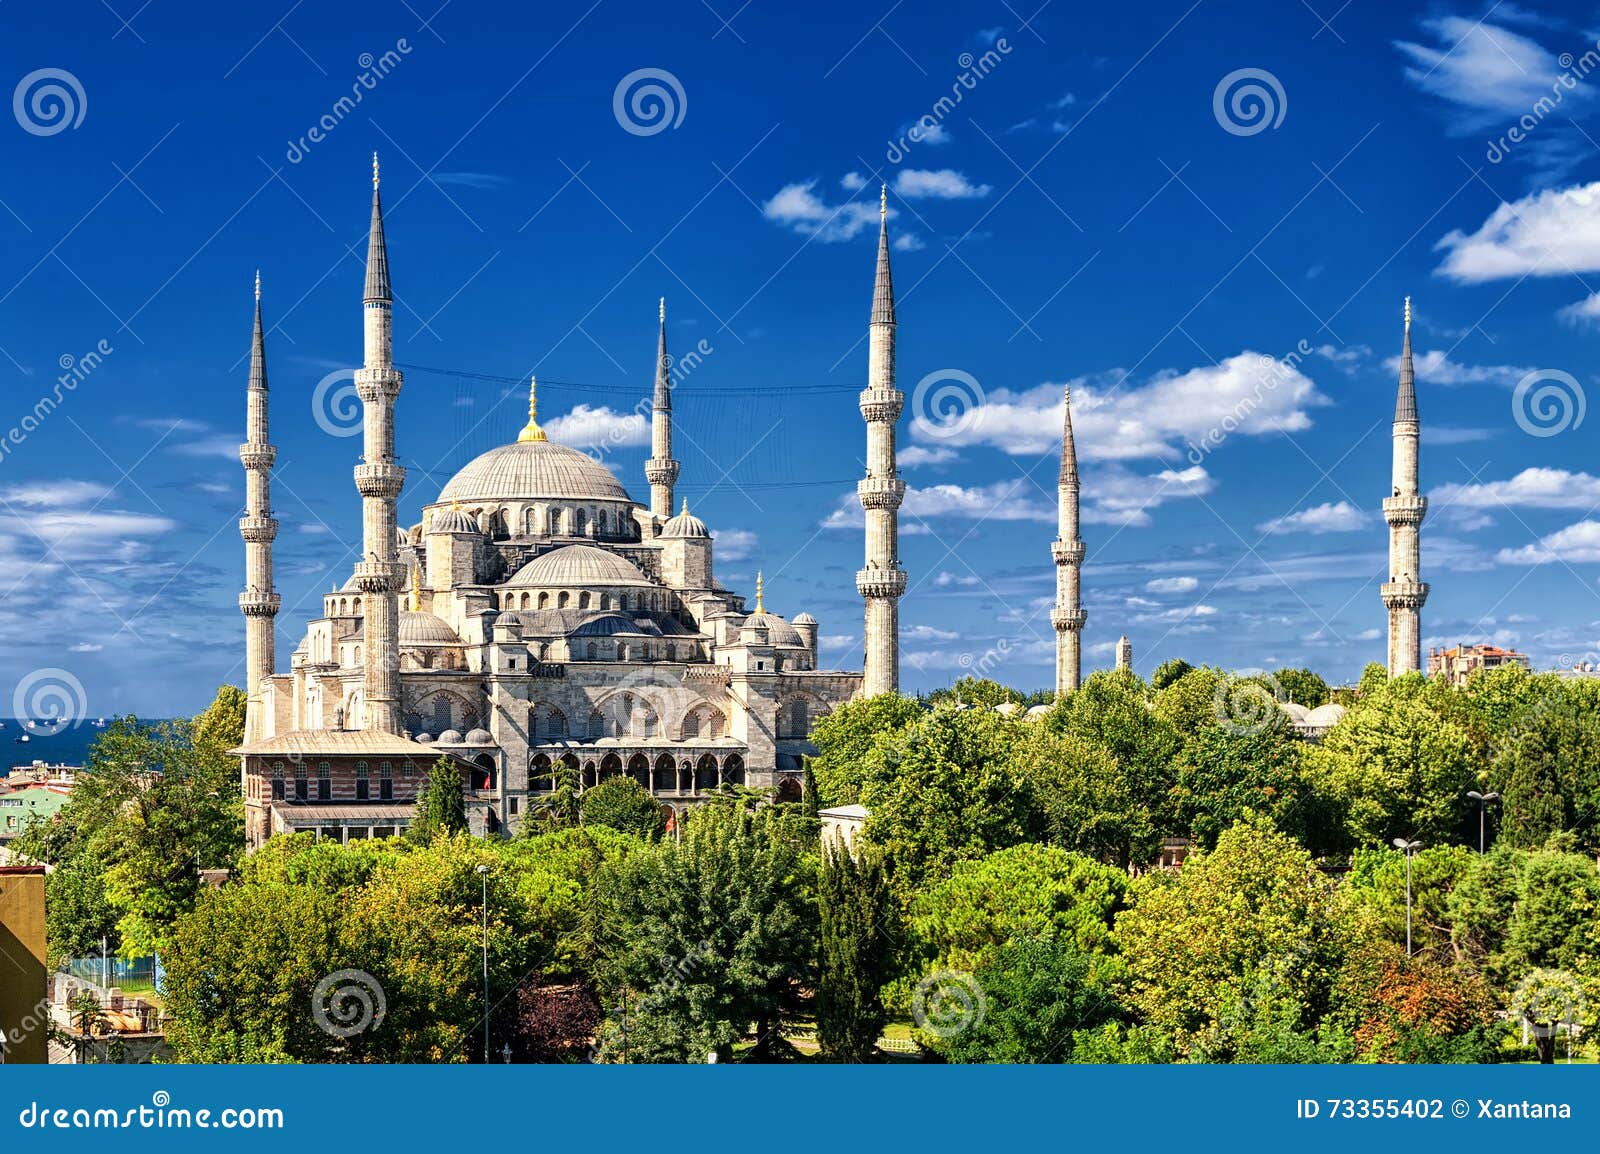 blue mosque, sultanahmet, istanbul, turkey